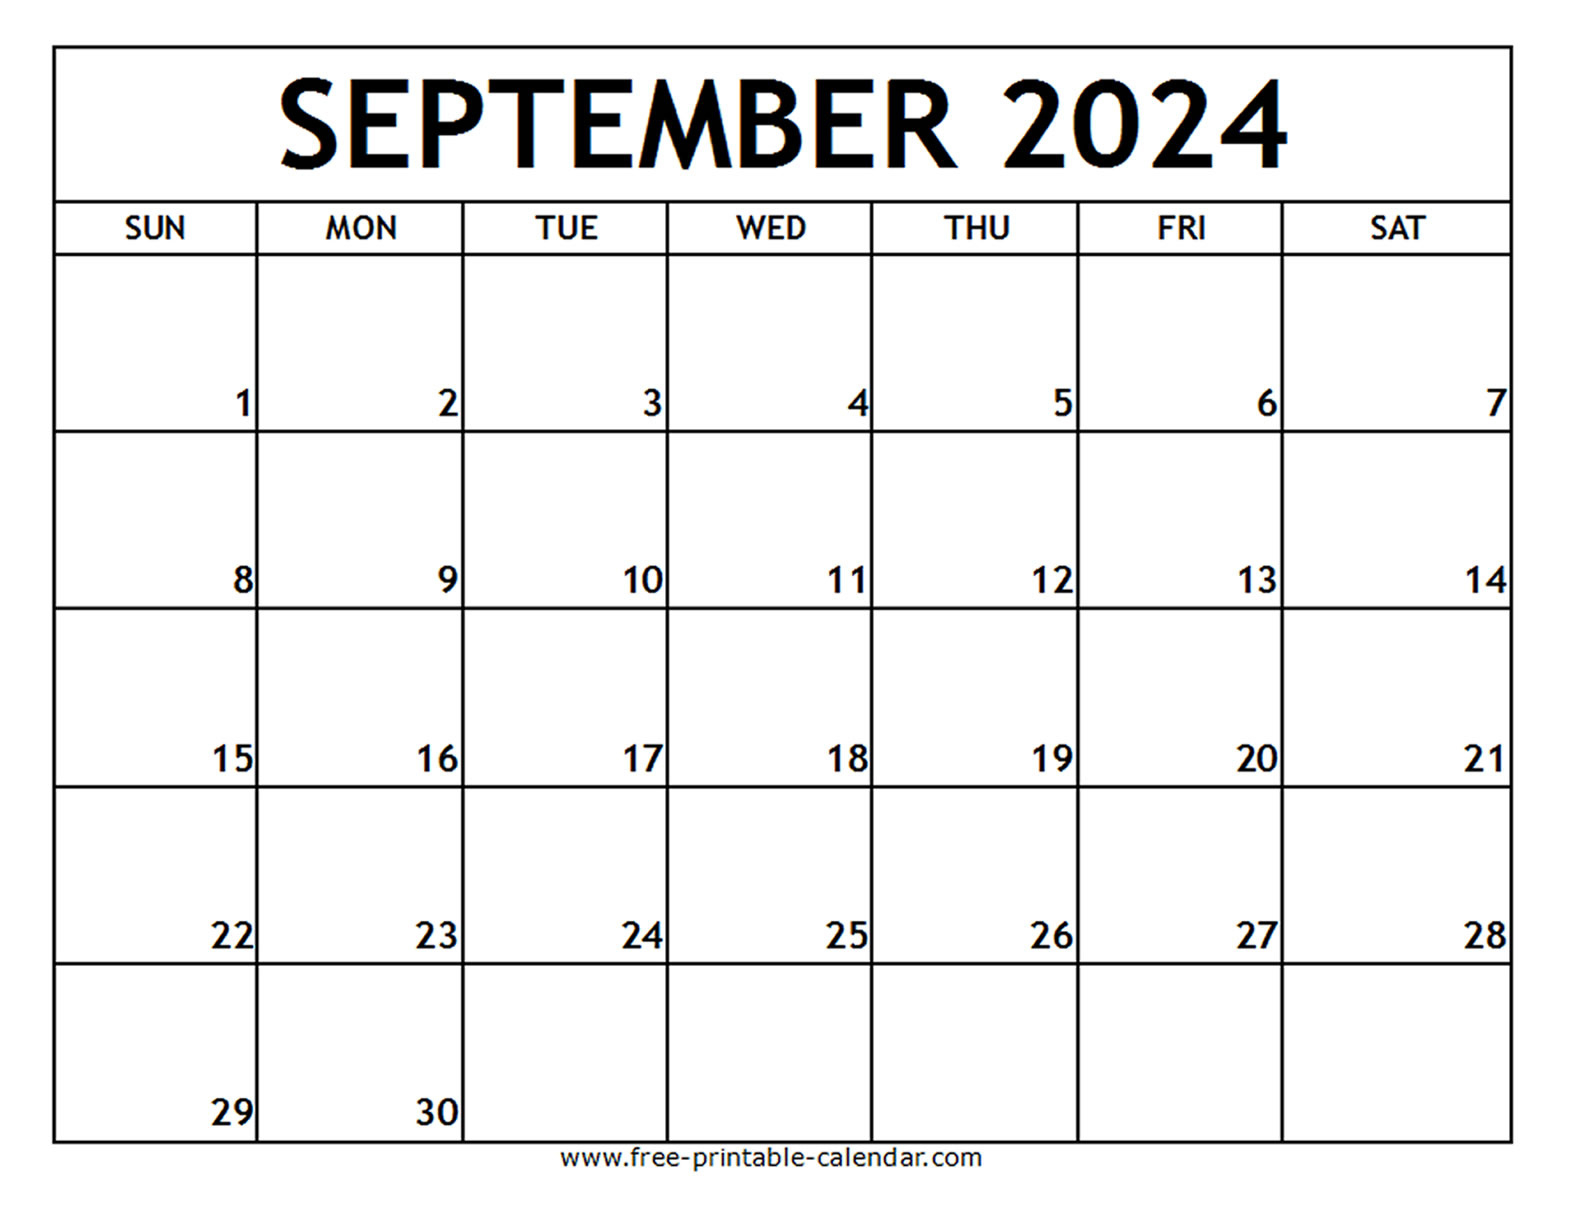 September 2024 Printable Calendar - Free-Printable-Calendar for Free Printable Calendar 2024 September